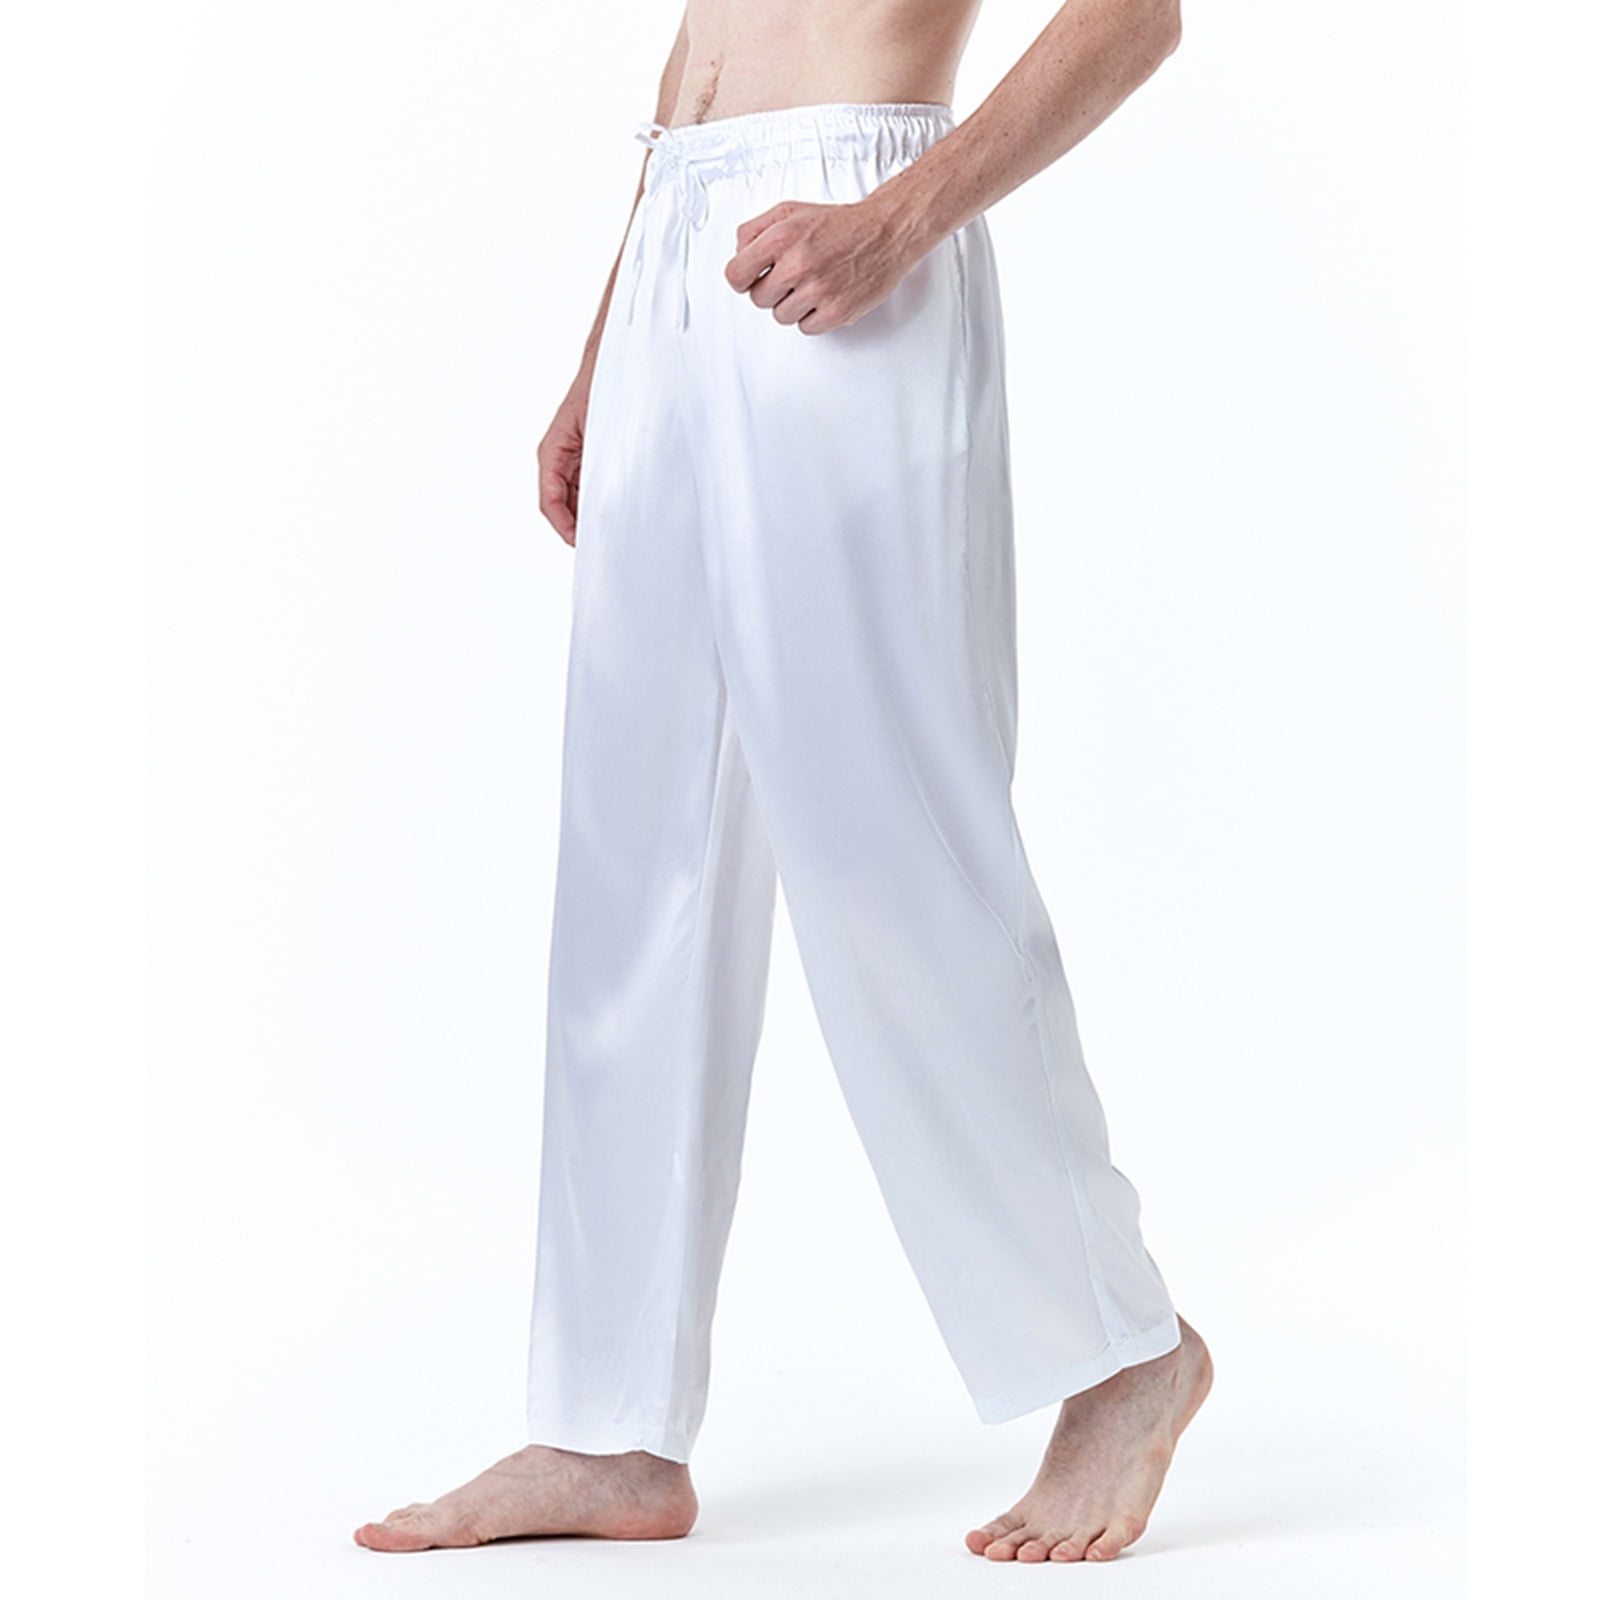 Buy la Vie en Rose Soft Jersey Lace Trim Pants for Women Online  Tata CLiQ  Luxury